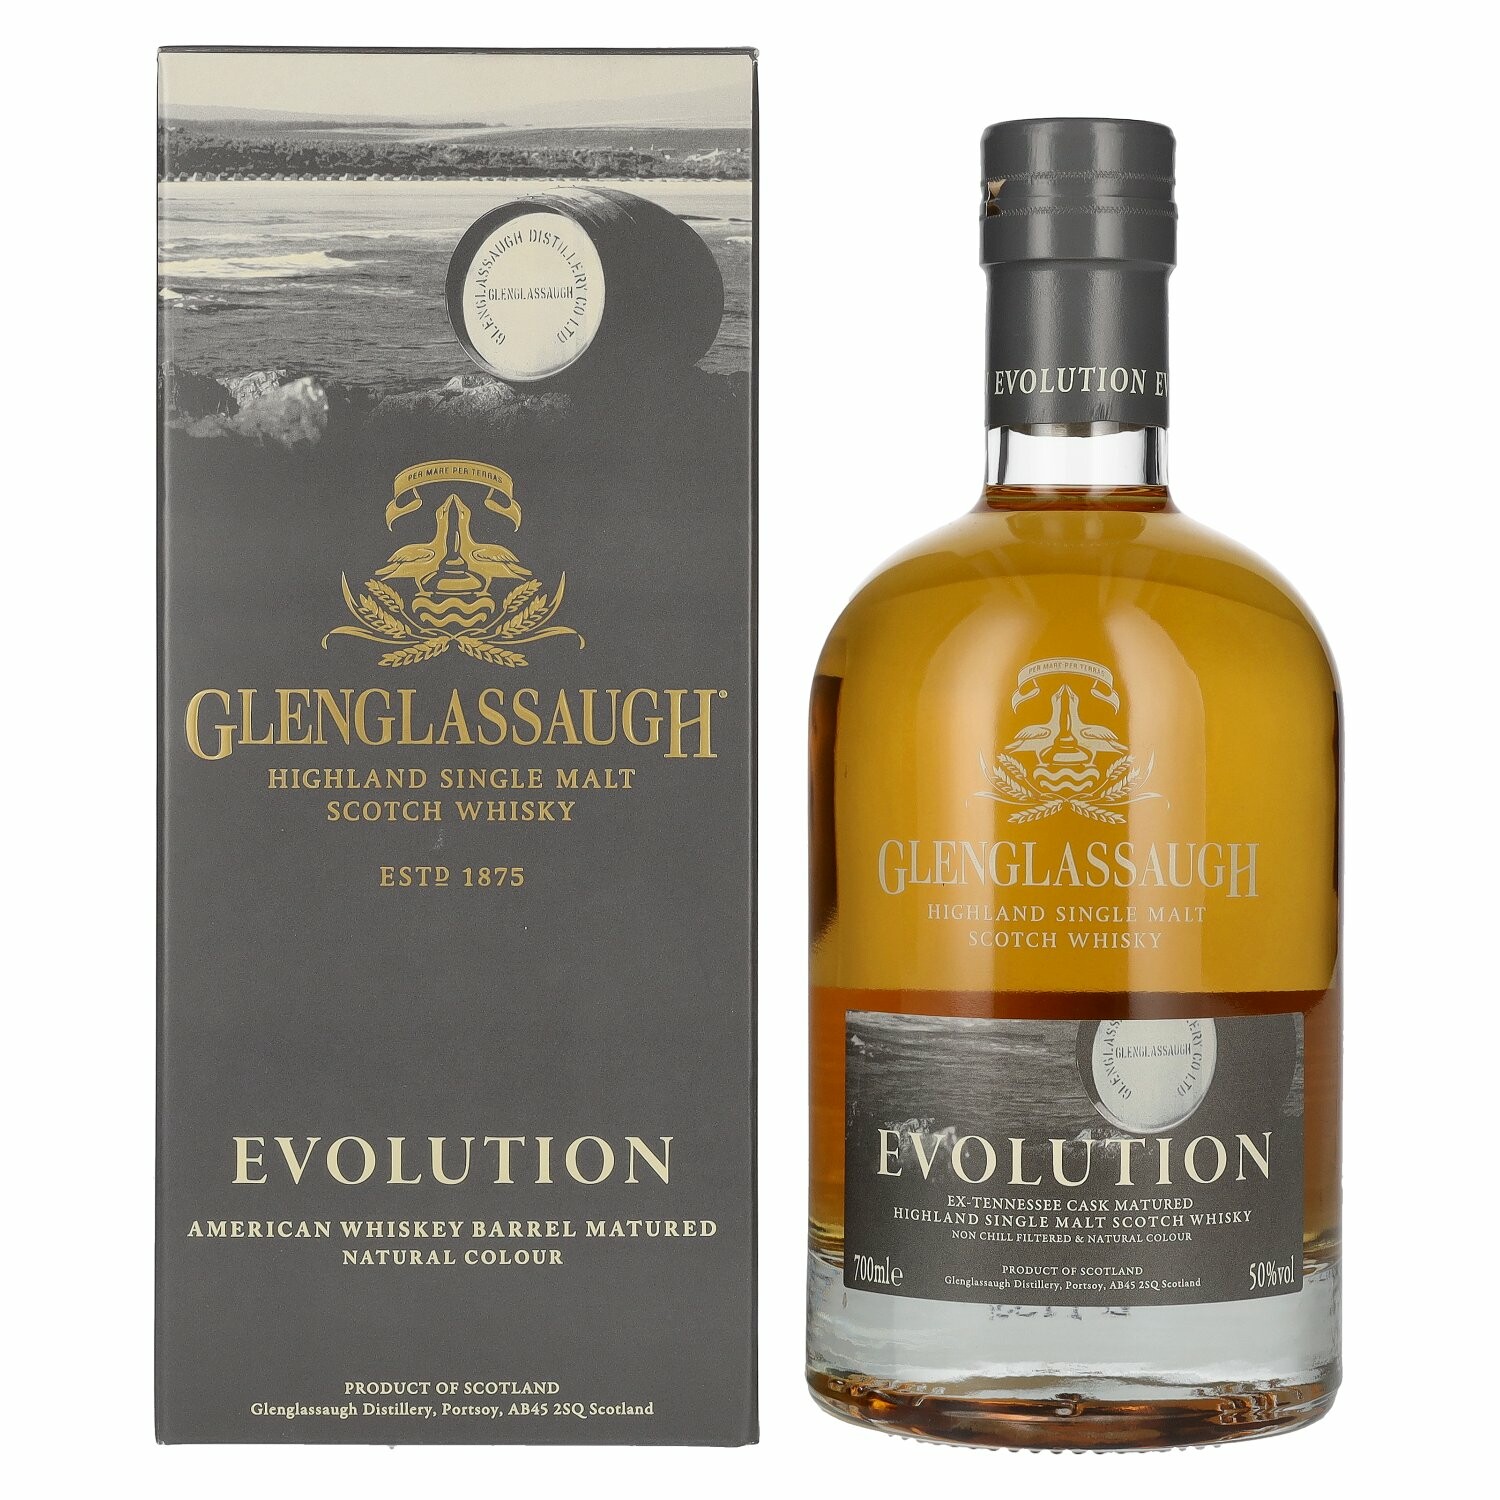 Glenglassaugh EVOLUTION Highland Single Malt Scotch Whisky 50% Vol. 0,7l in Giftbox